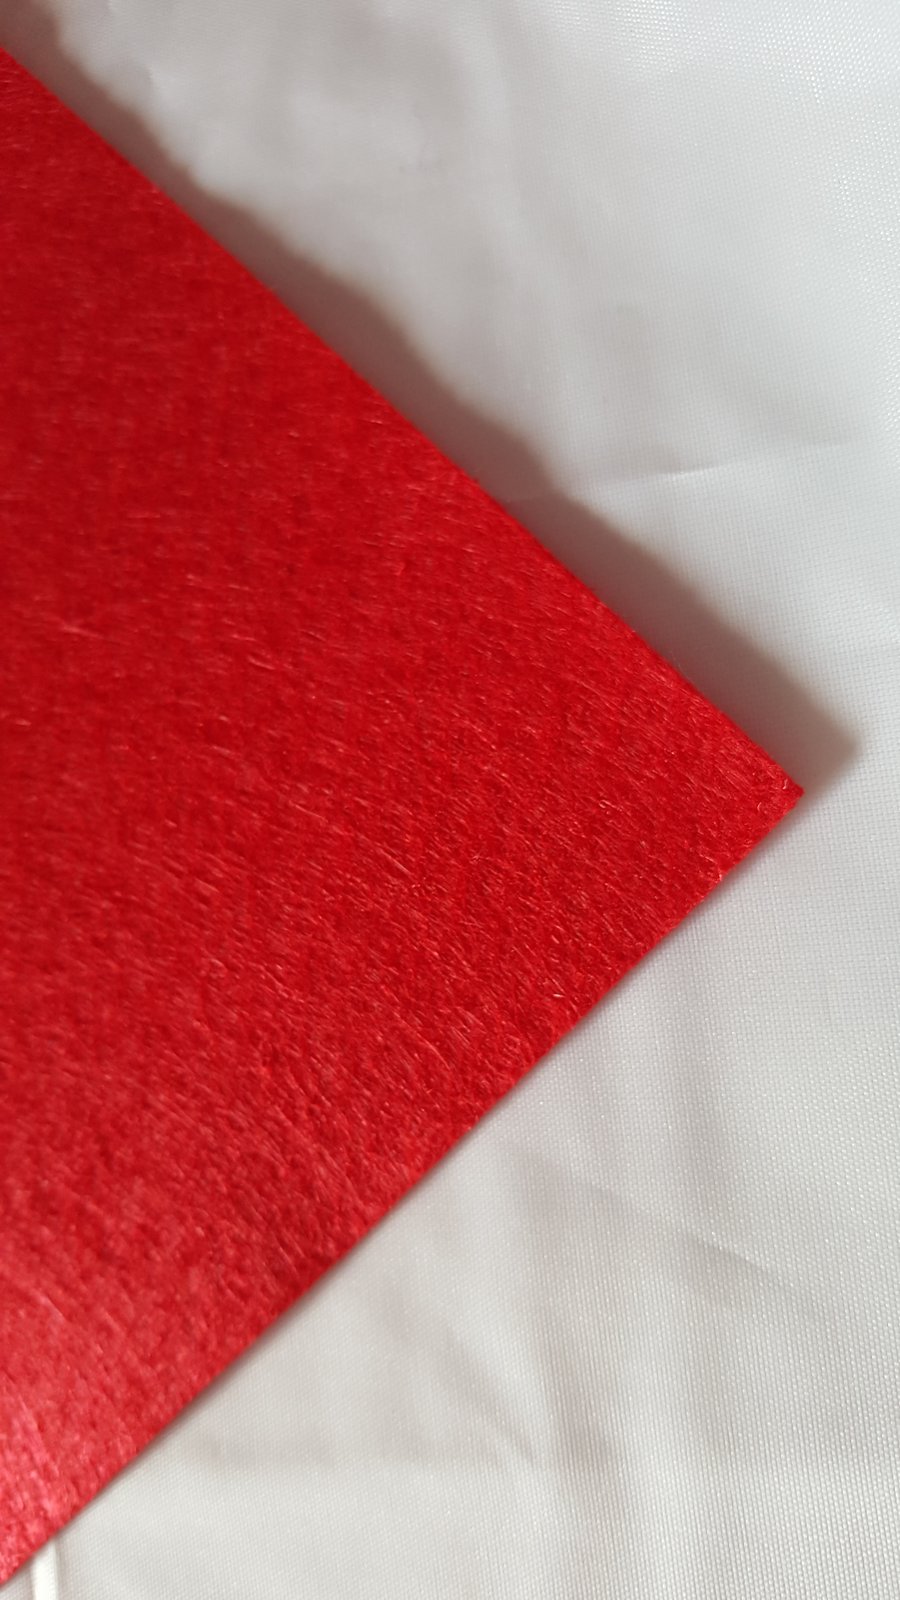 1 x Felt Sheet - Square - 12" (30cm) - Red 